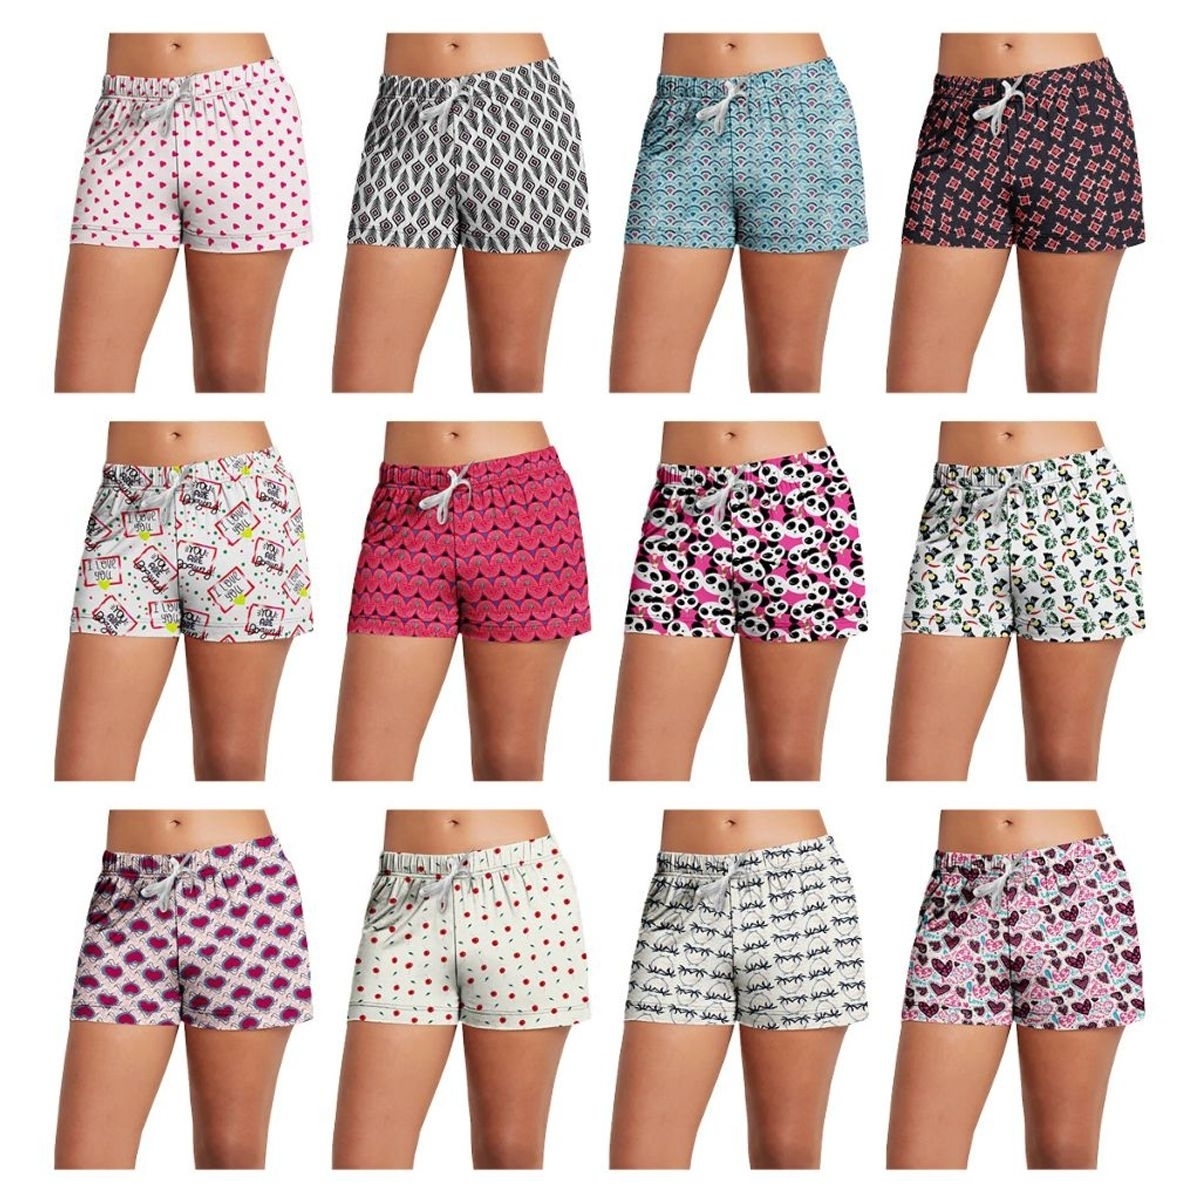 Multi-Pack: Women's Super-Soft Lightweight Fun Printed Comfy Lounge Bottom Pajama Shorts W/ Drawstring - 5-pack, Medium, Love